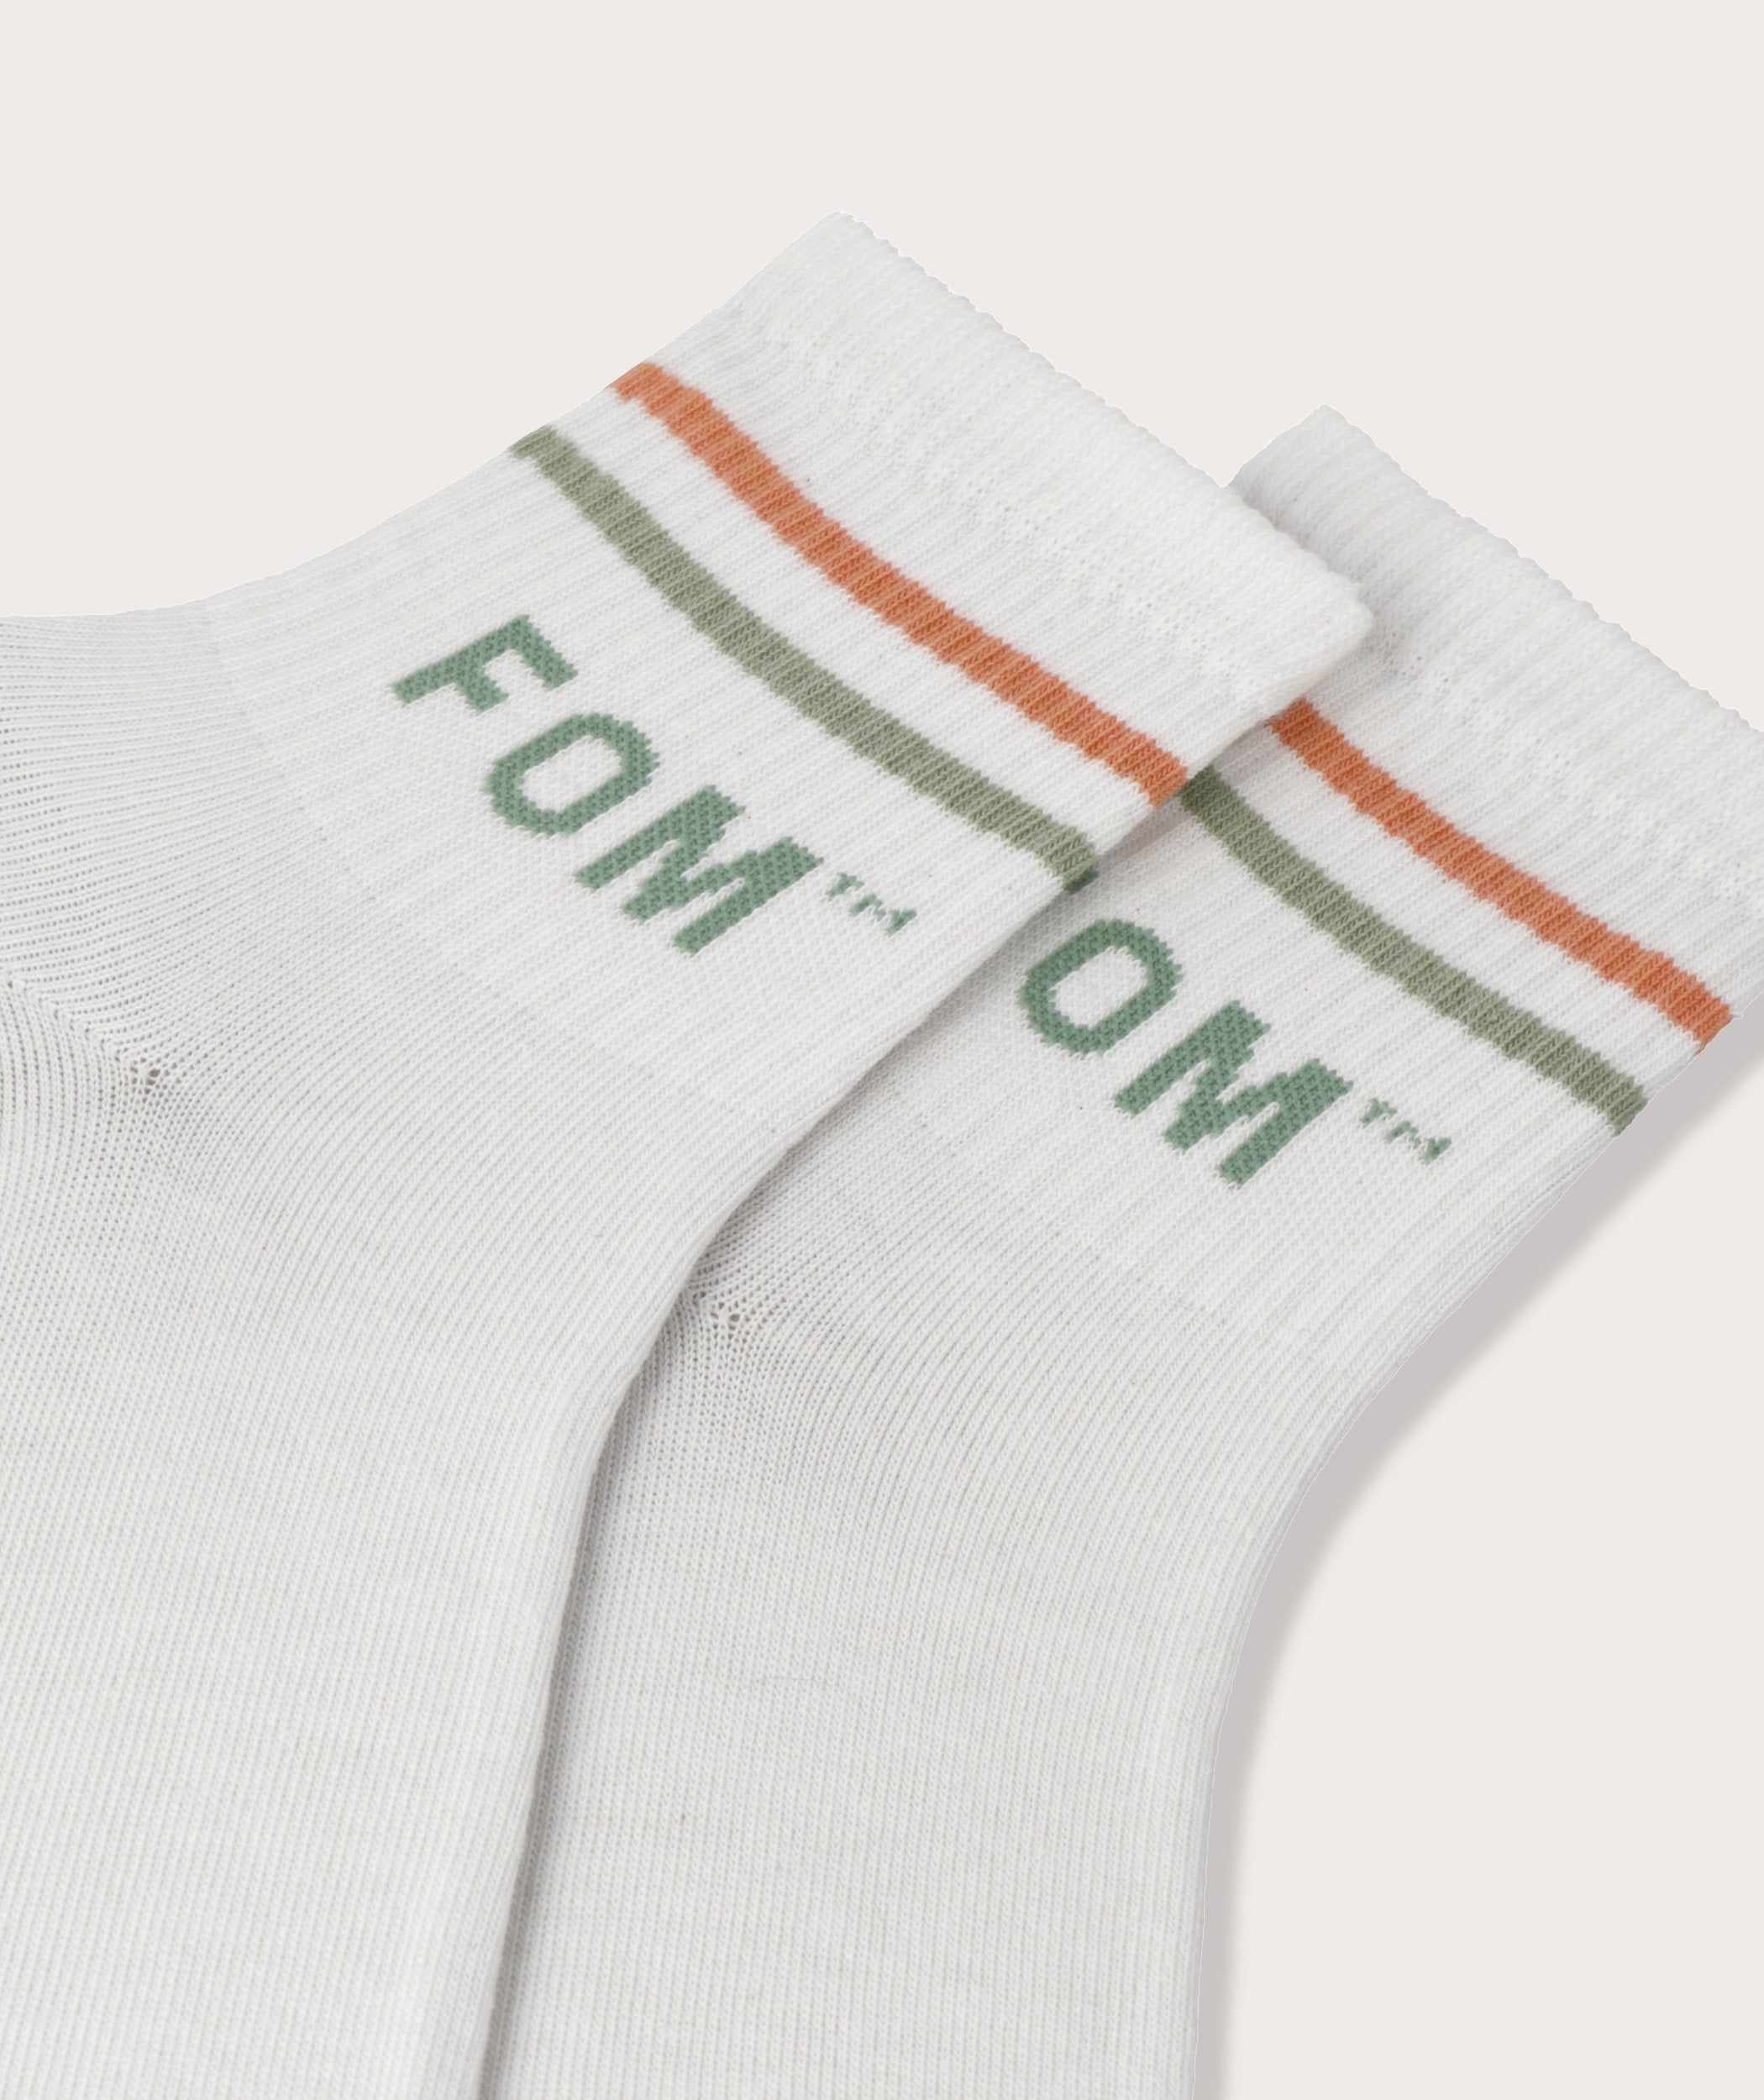 FOM Active Socks - Beige Peach & Lime Stripes (Size 4-7)